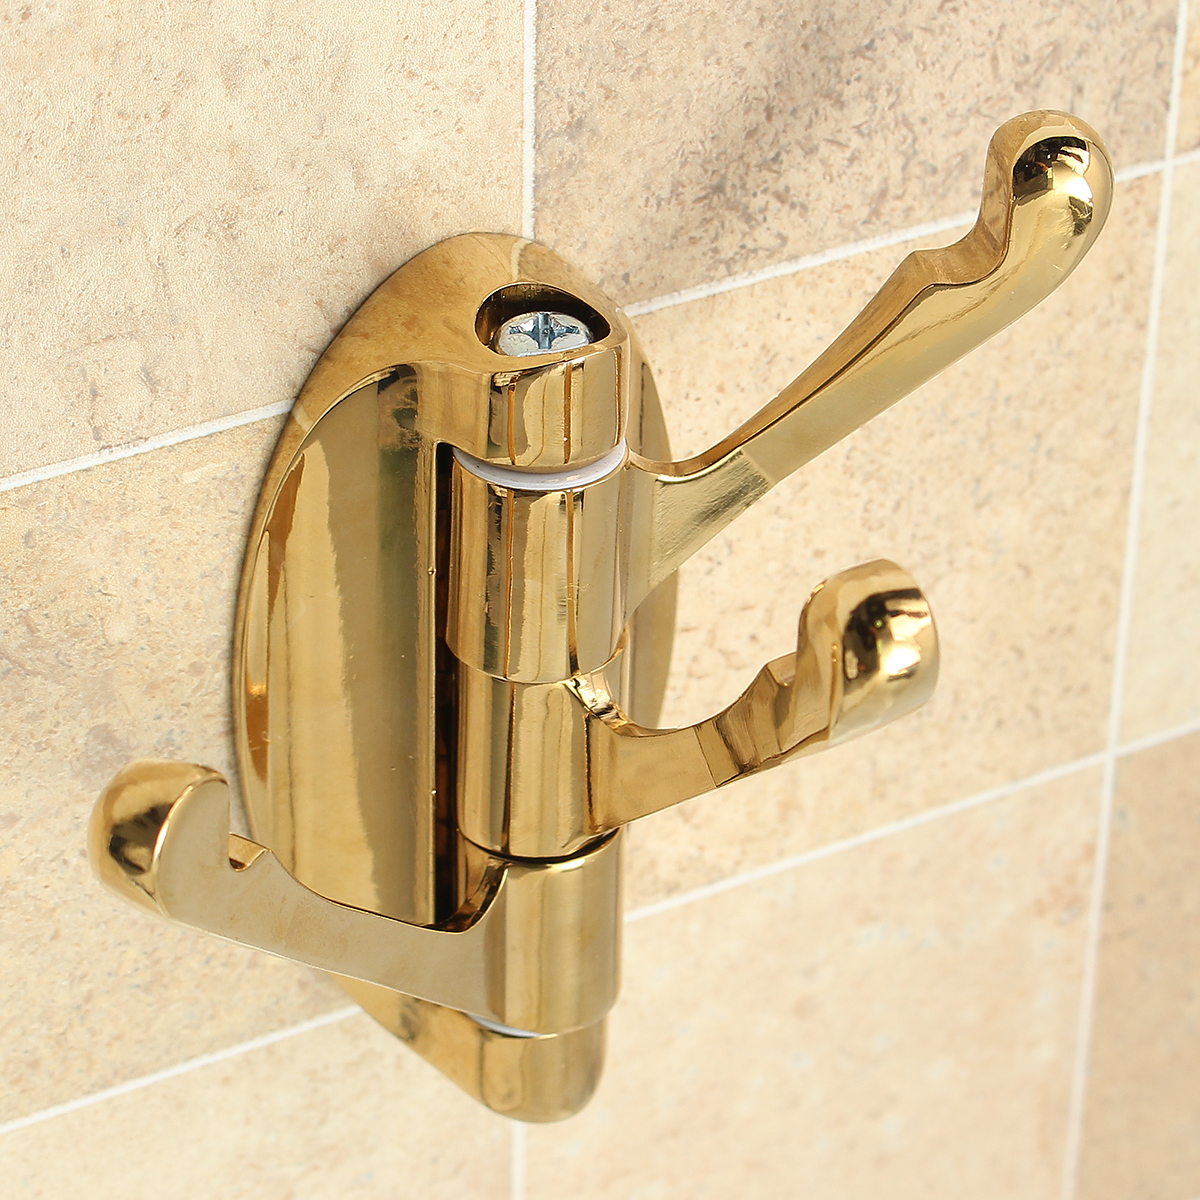 180deg-Revolve-Bathroom-Robe-Hook-Holder-Wall-Mounted-Adjustable-3-Hooks-Cloth-Hat-Towel-Hanger-1419817-2